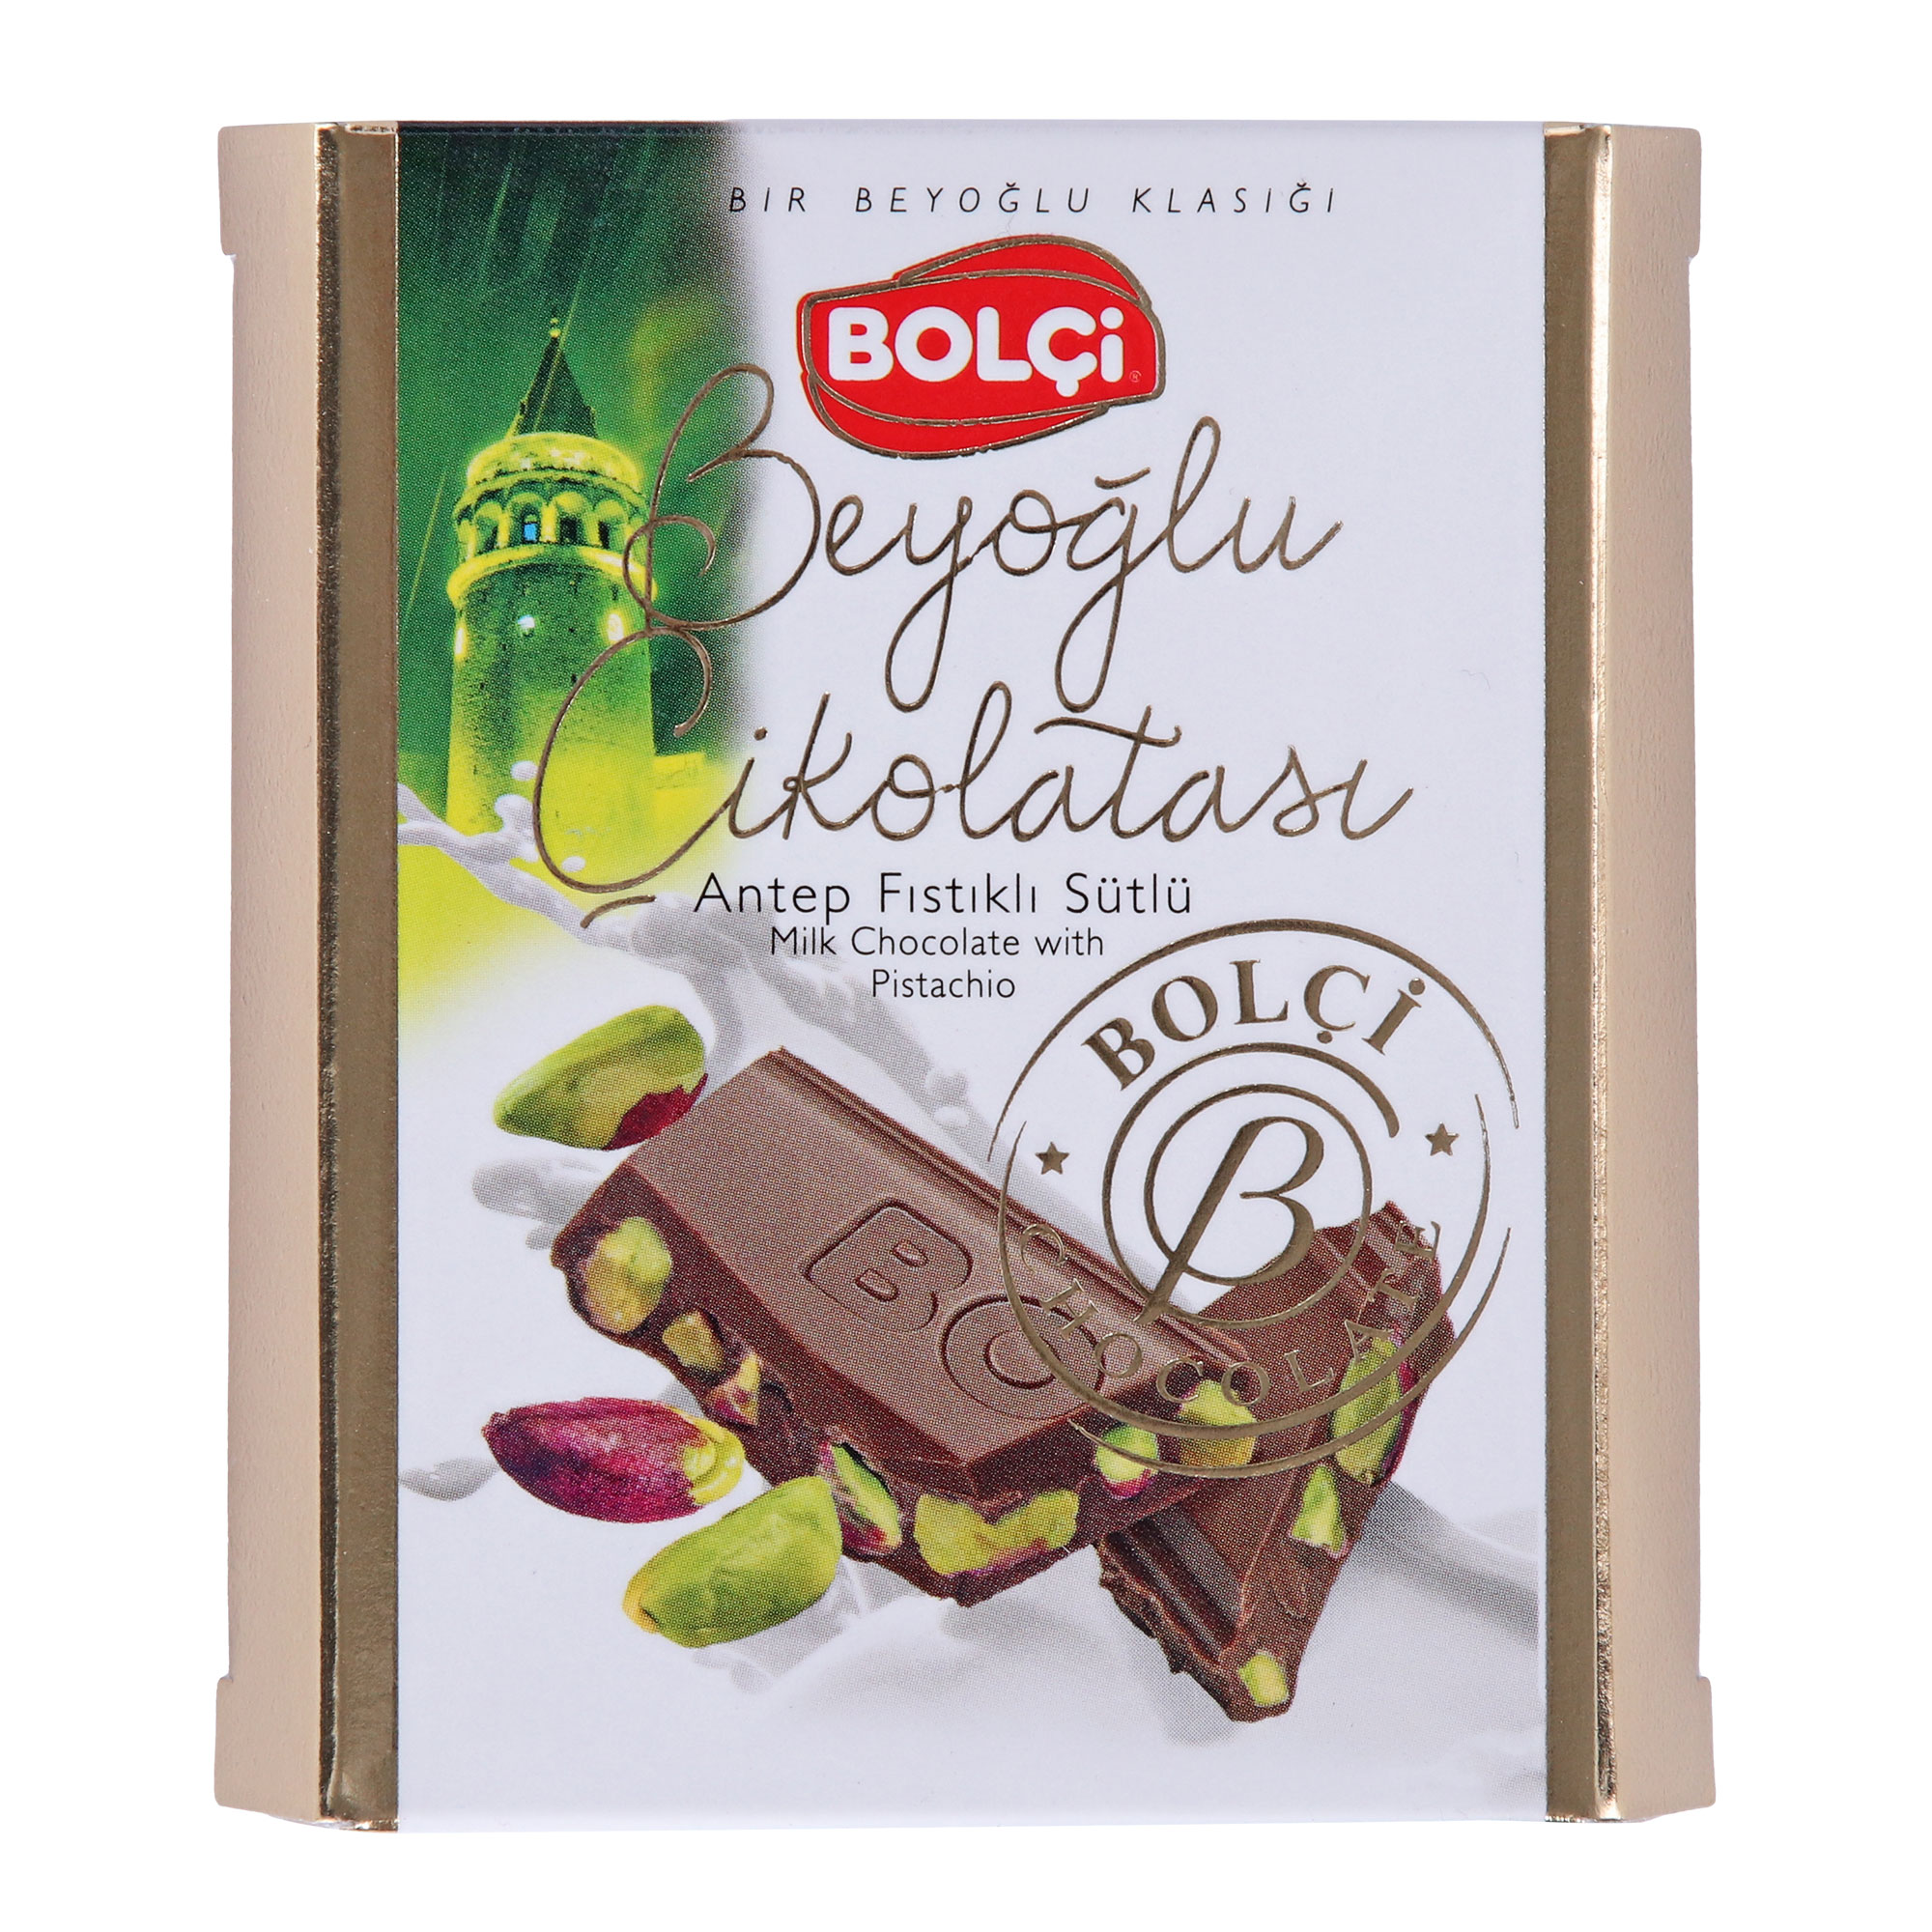 Молочный шоколад Bolci с цельной фисташкой, 60 г шоколад победа вкуса max energy молочный 36% какао без сахара 100 гр